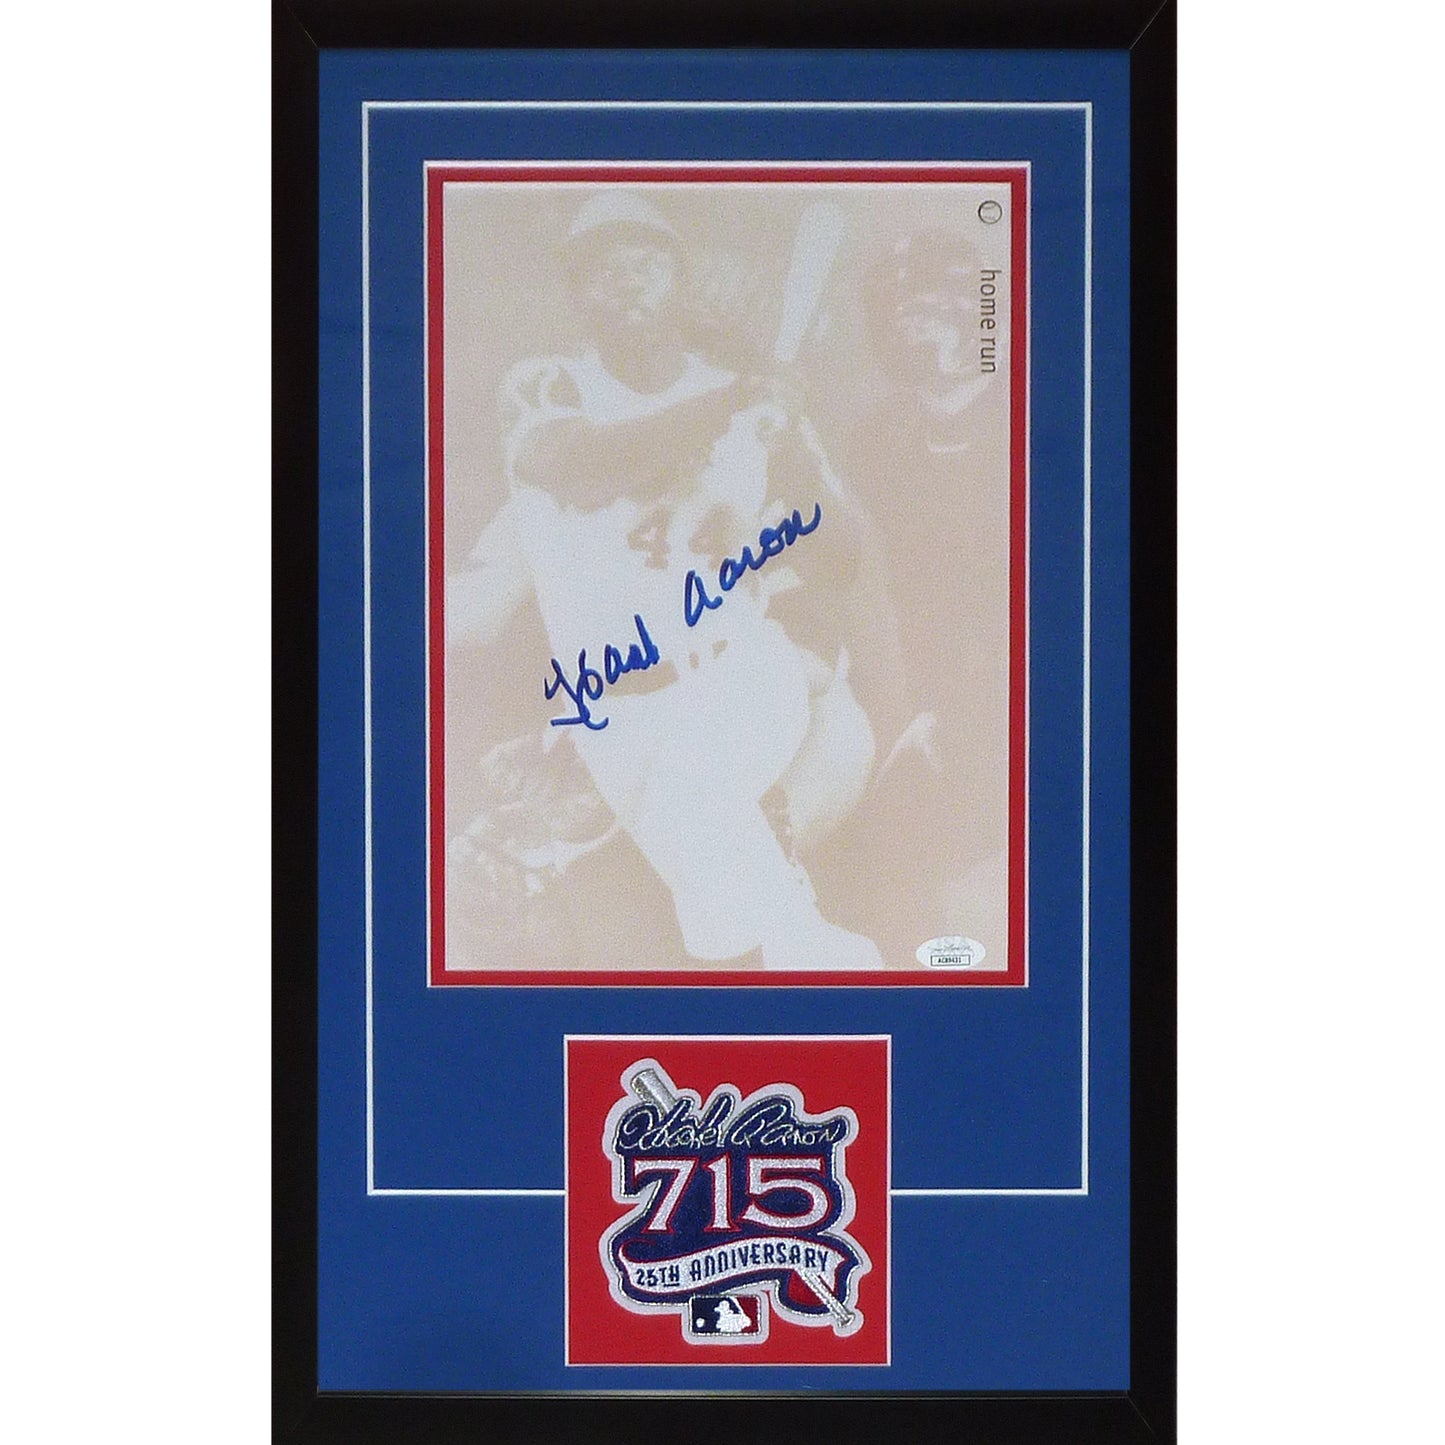 Hank Aaron Autographed Atlanta Braves Deluxe Framed 11x14 Photo w/ Patch - JSA